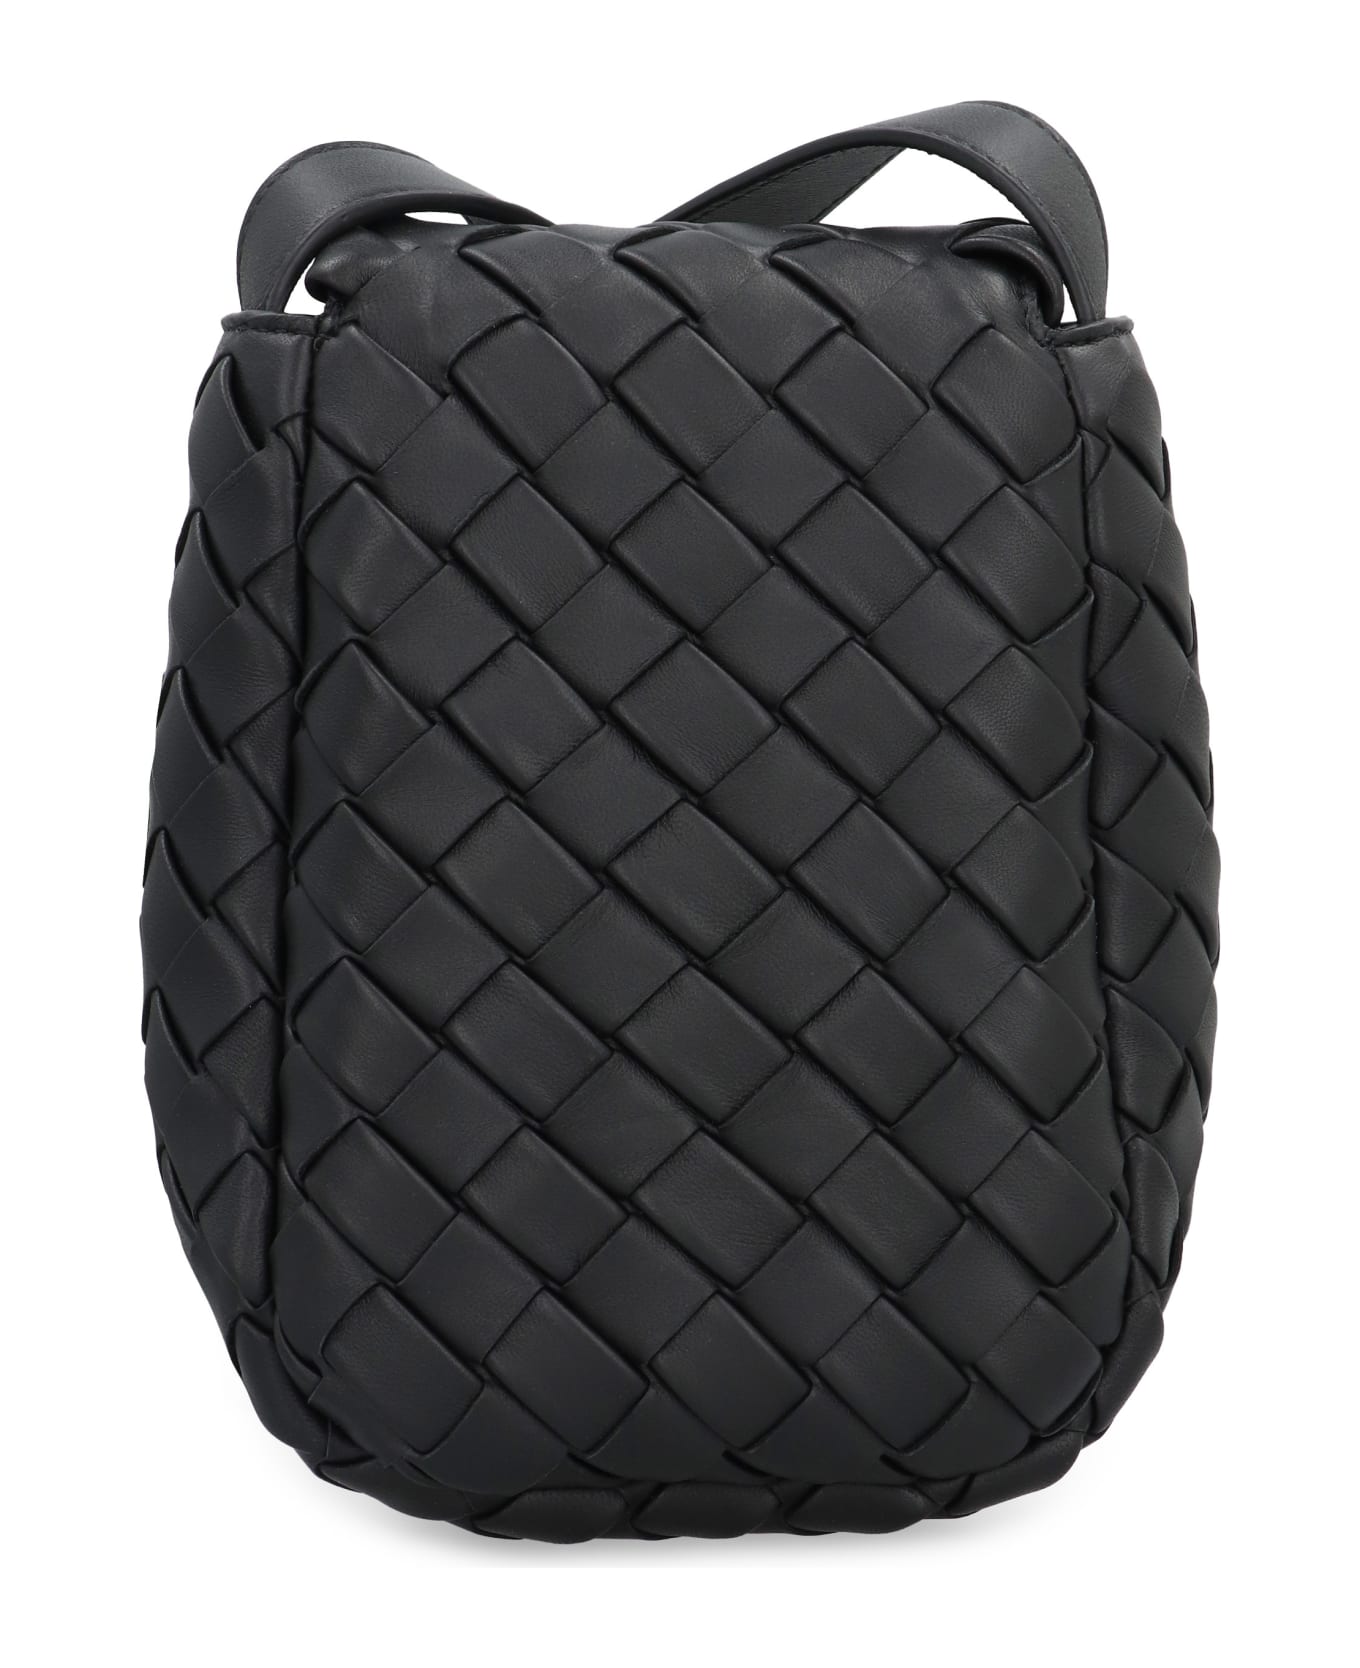 Bottega Veneta Leather Crossbody Bag - black